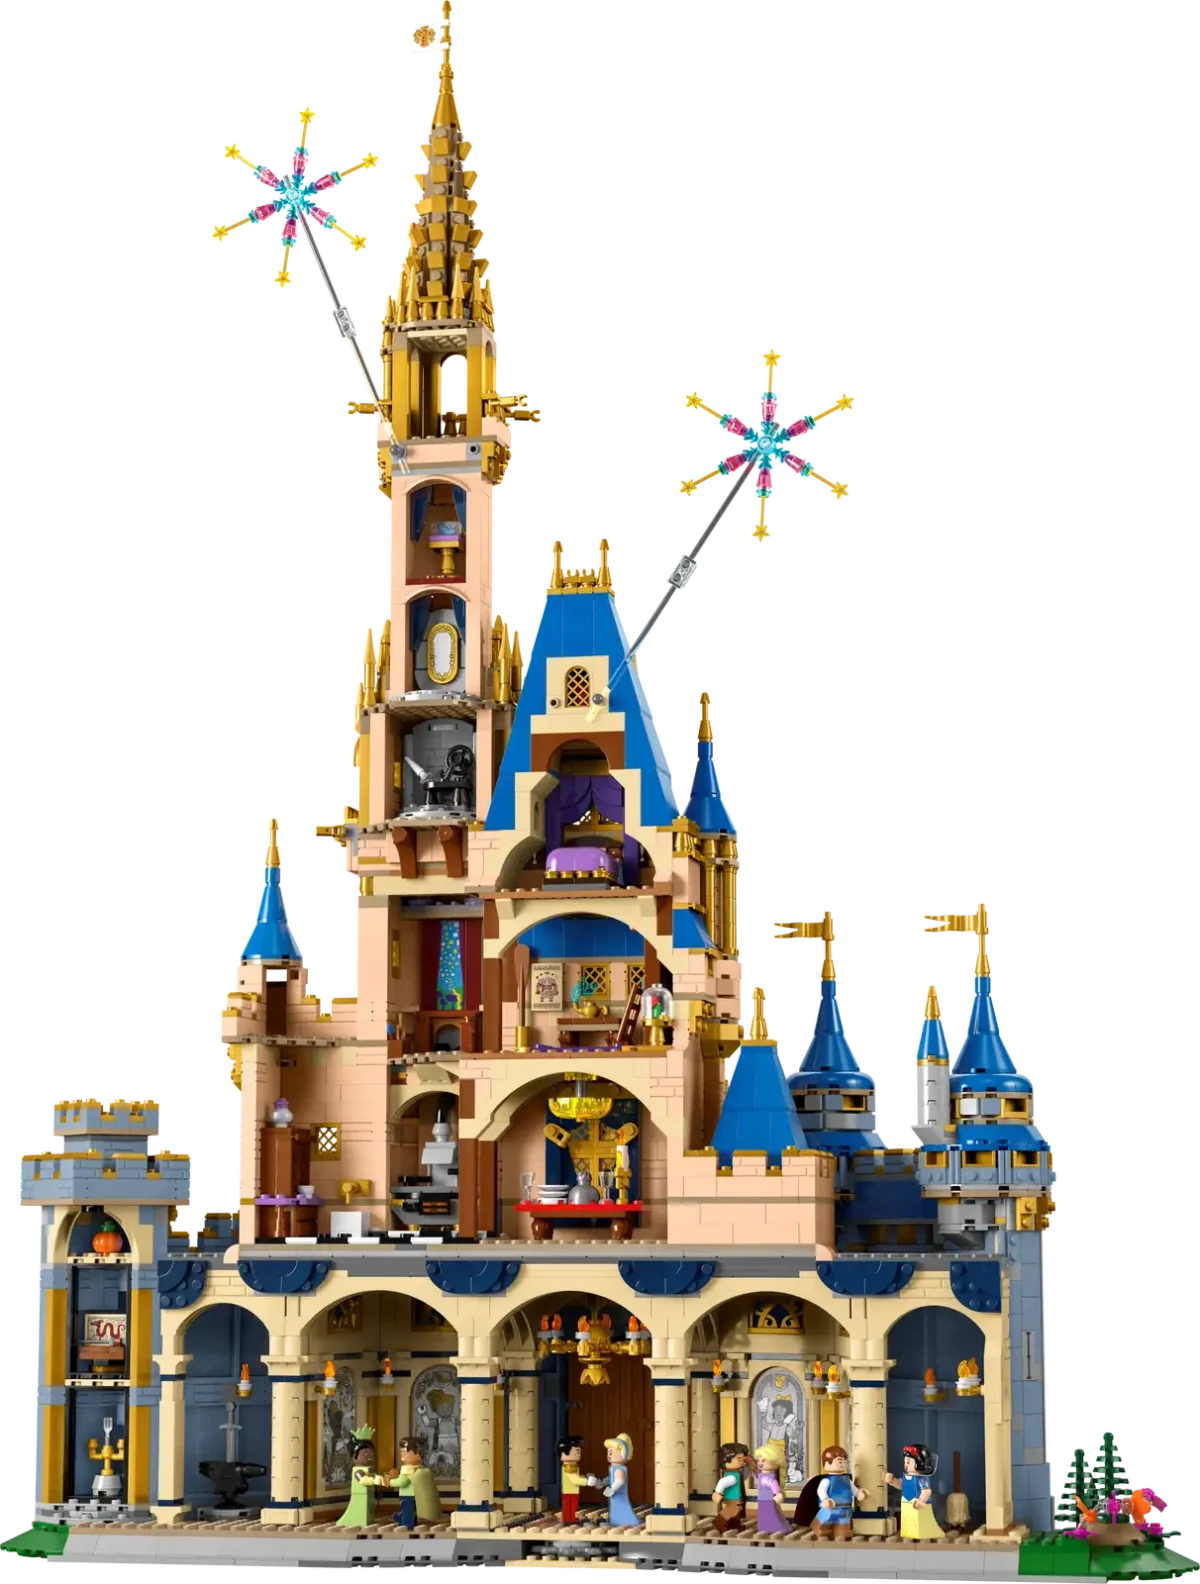 Lego Disney Castle